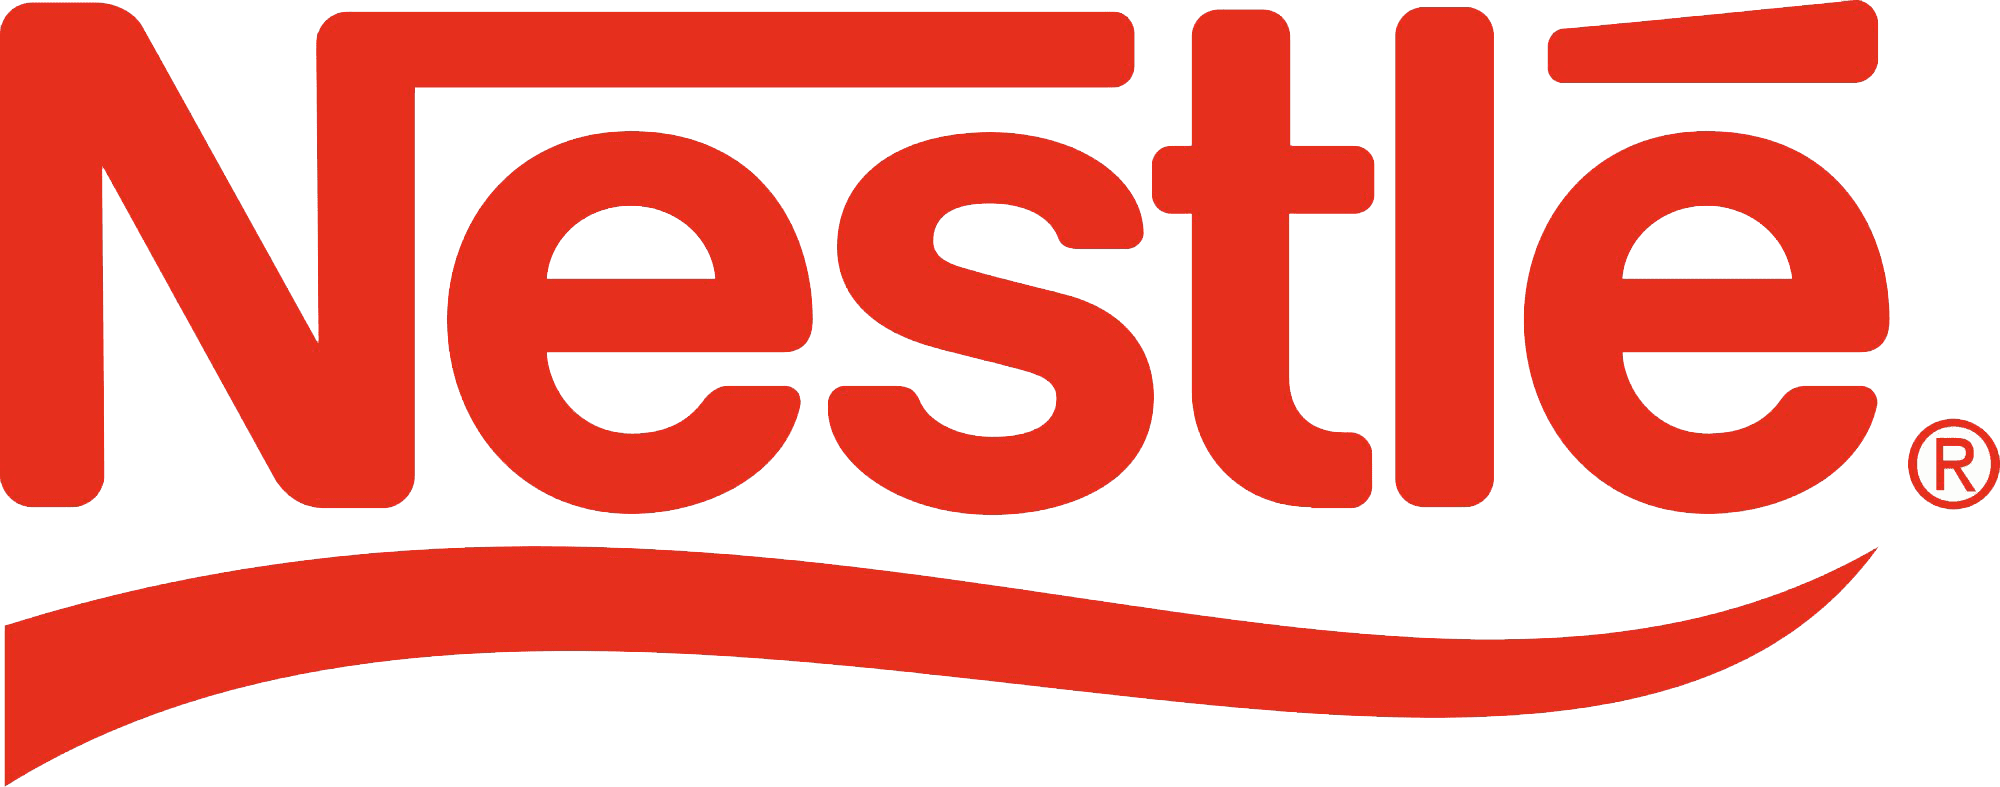 Nestle net profit